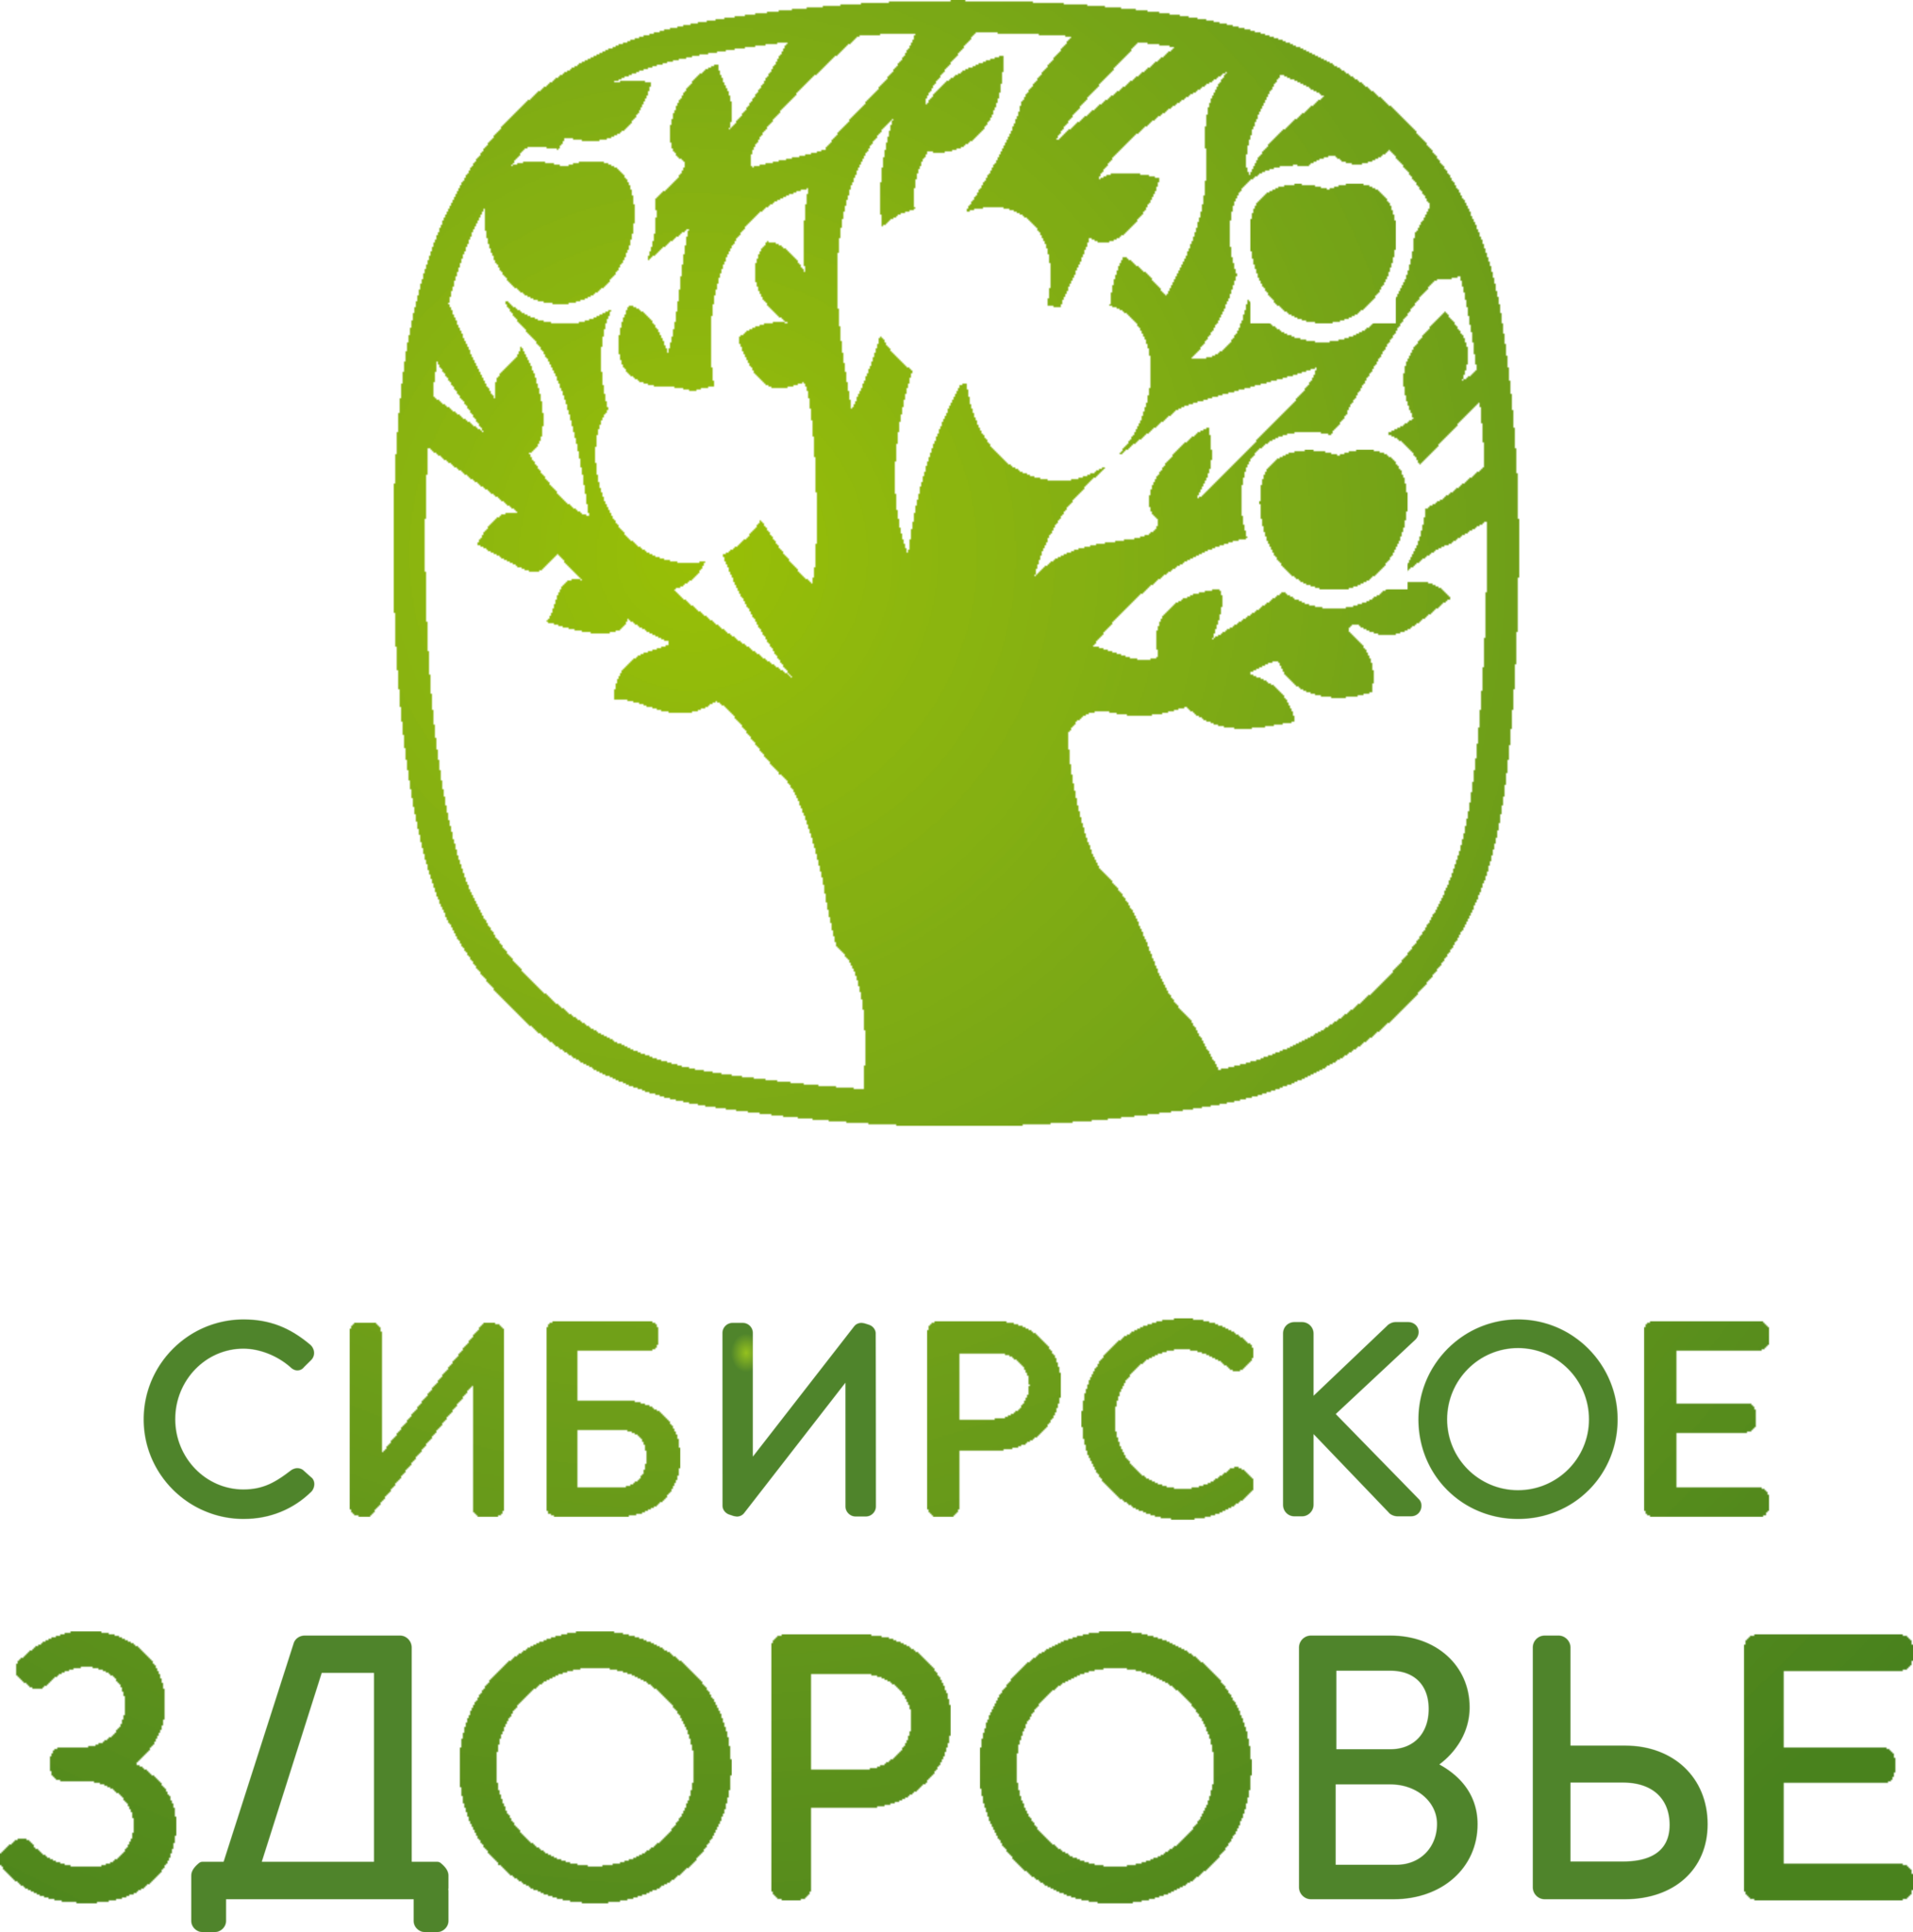 Сибирское здоровье логотип. Логотип корпорации Сибирское здоровье. Сибирское здоровье Siberian Wellness логотип. Сибирское здоровье логотип вектор.